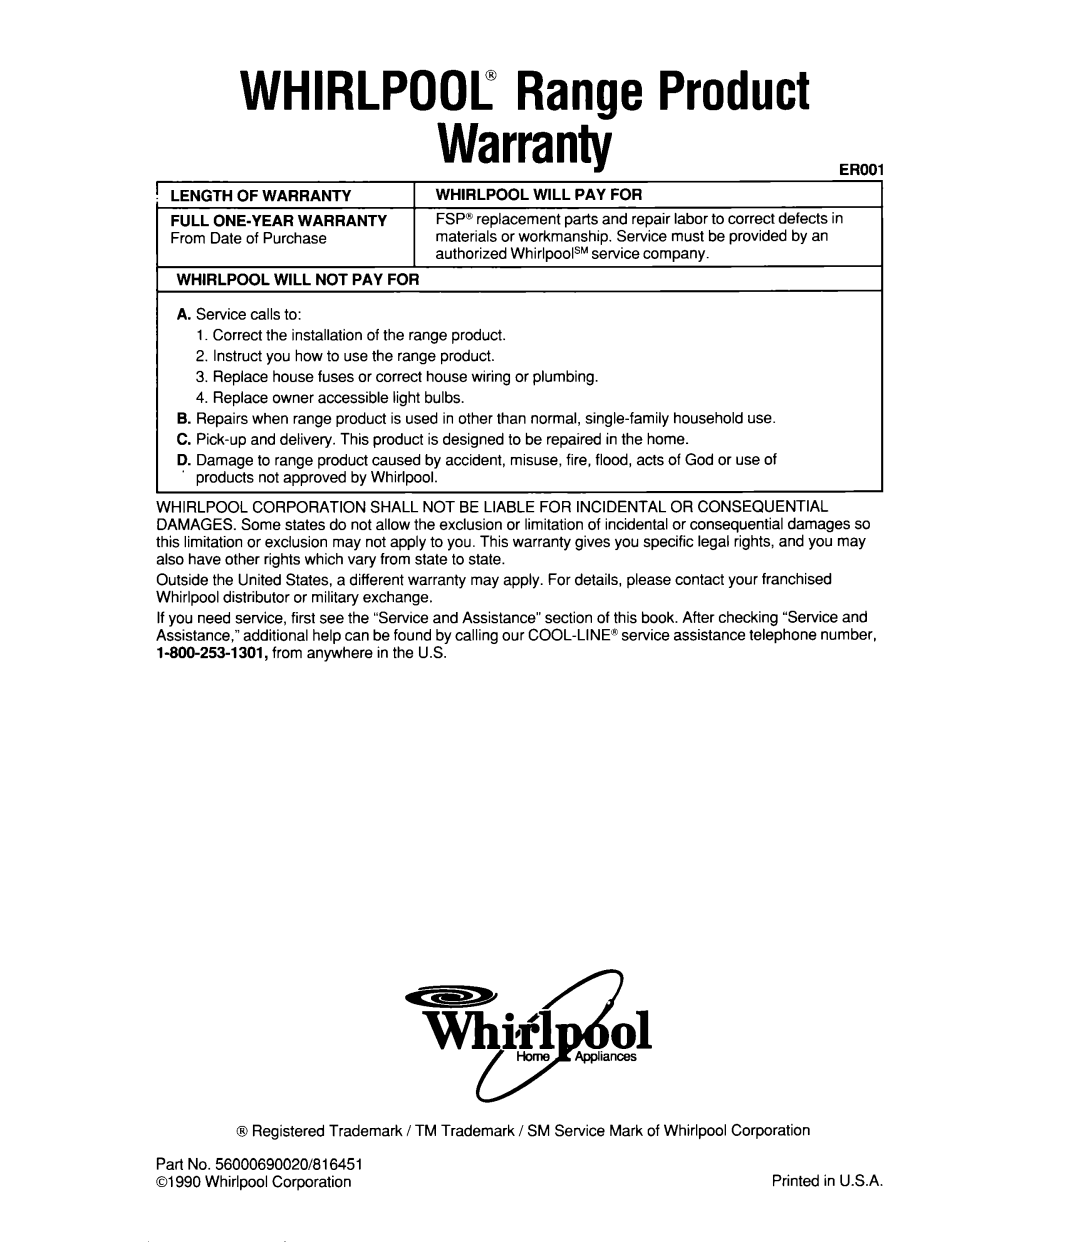 Whirlpool RF4700XW WHIRLPOOCRangeProduct, Length Of Warranty, Whirlpool Will Pay For, Full One-Yearwarranty, EL+1 